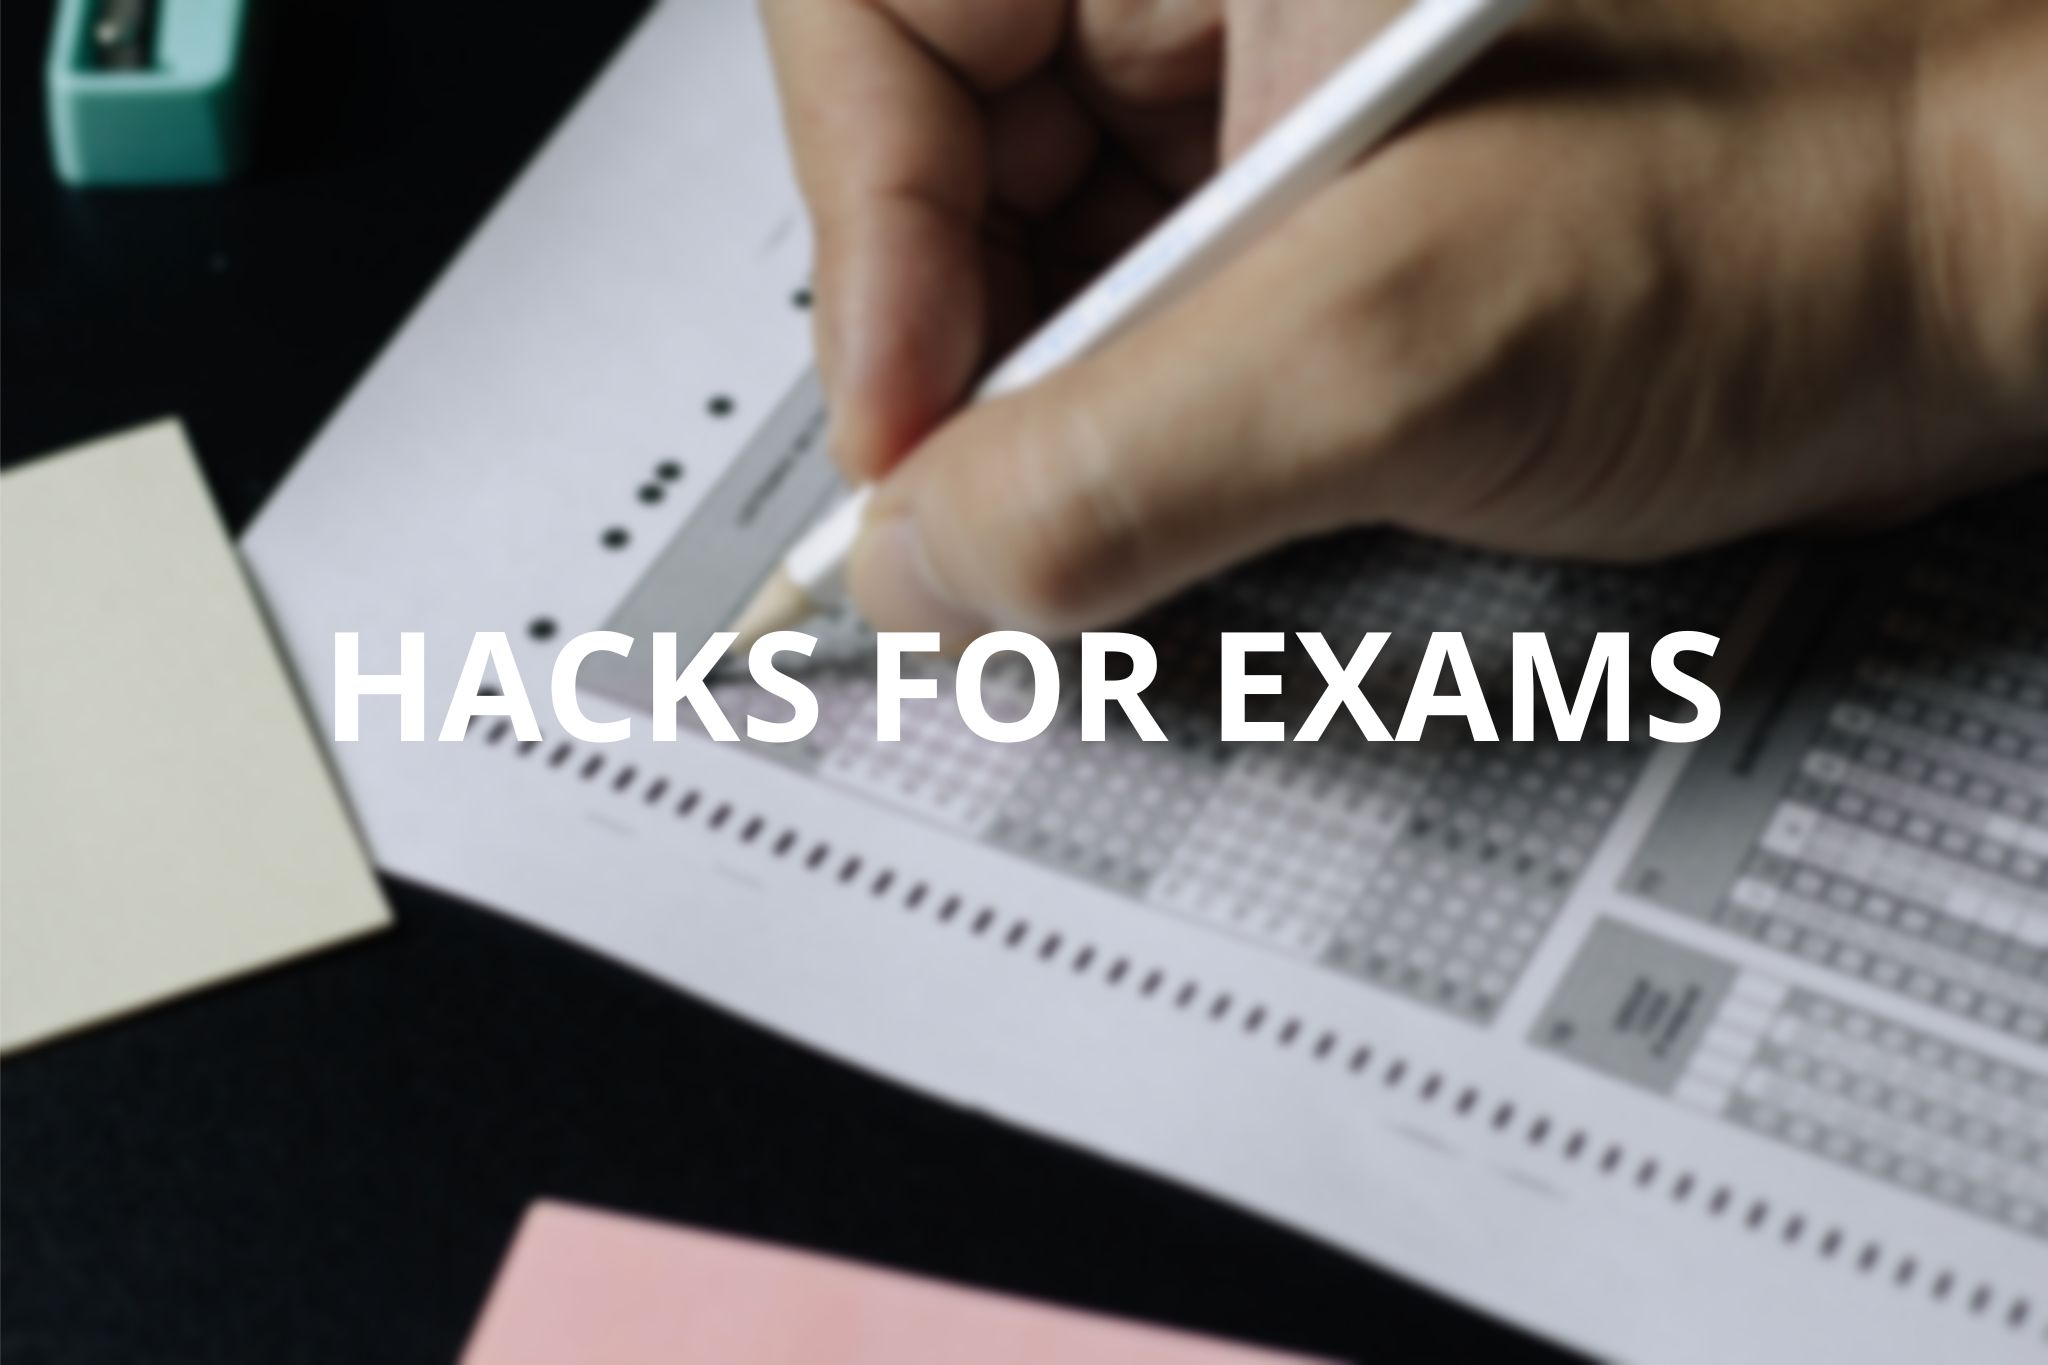 Study hacks for exams